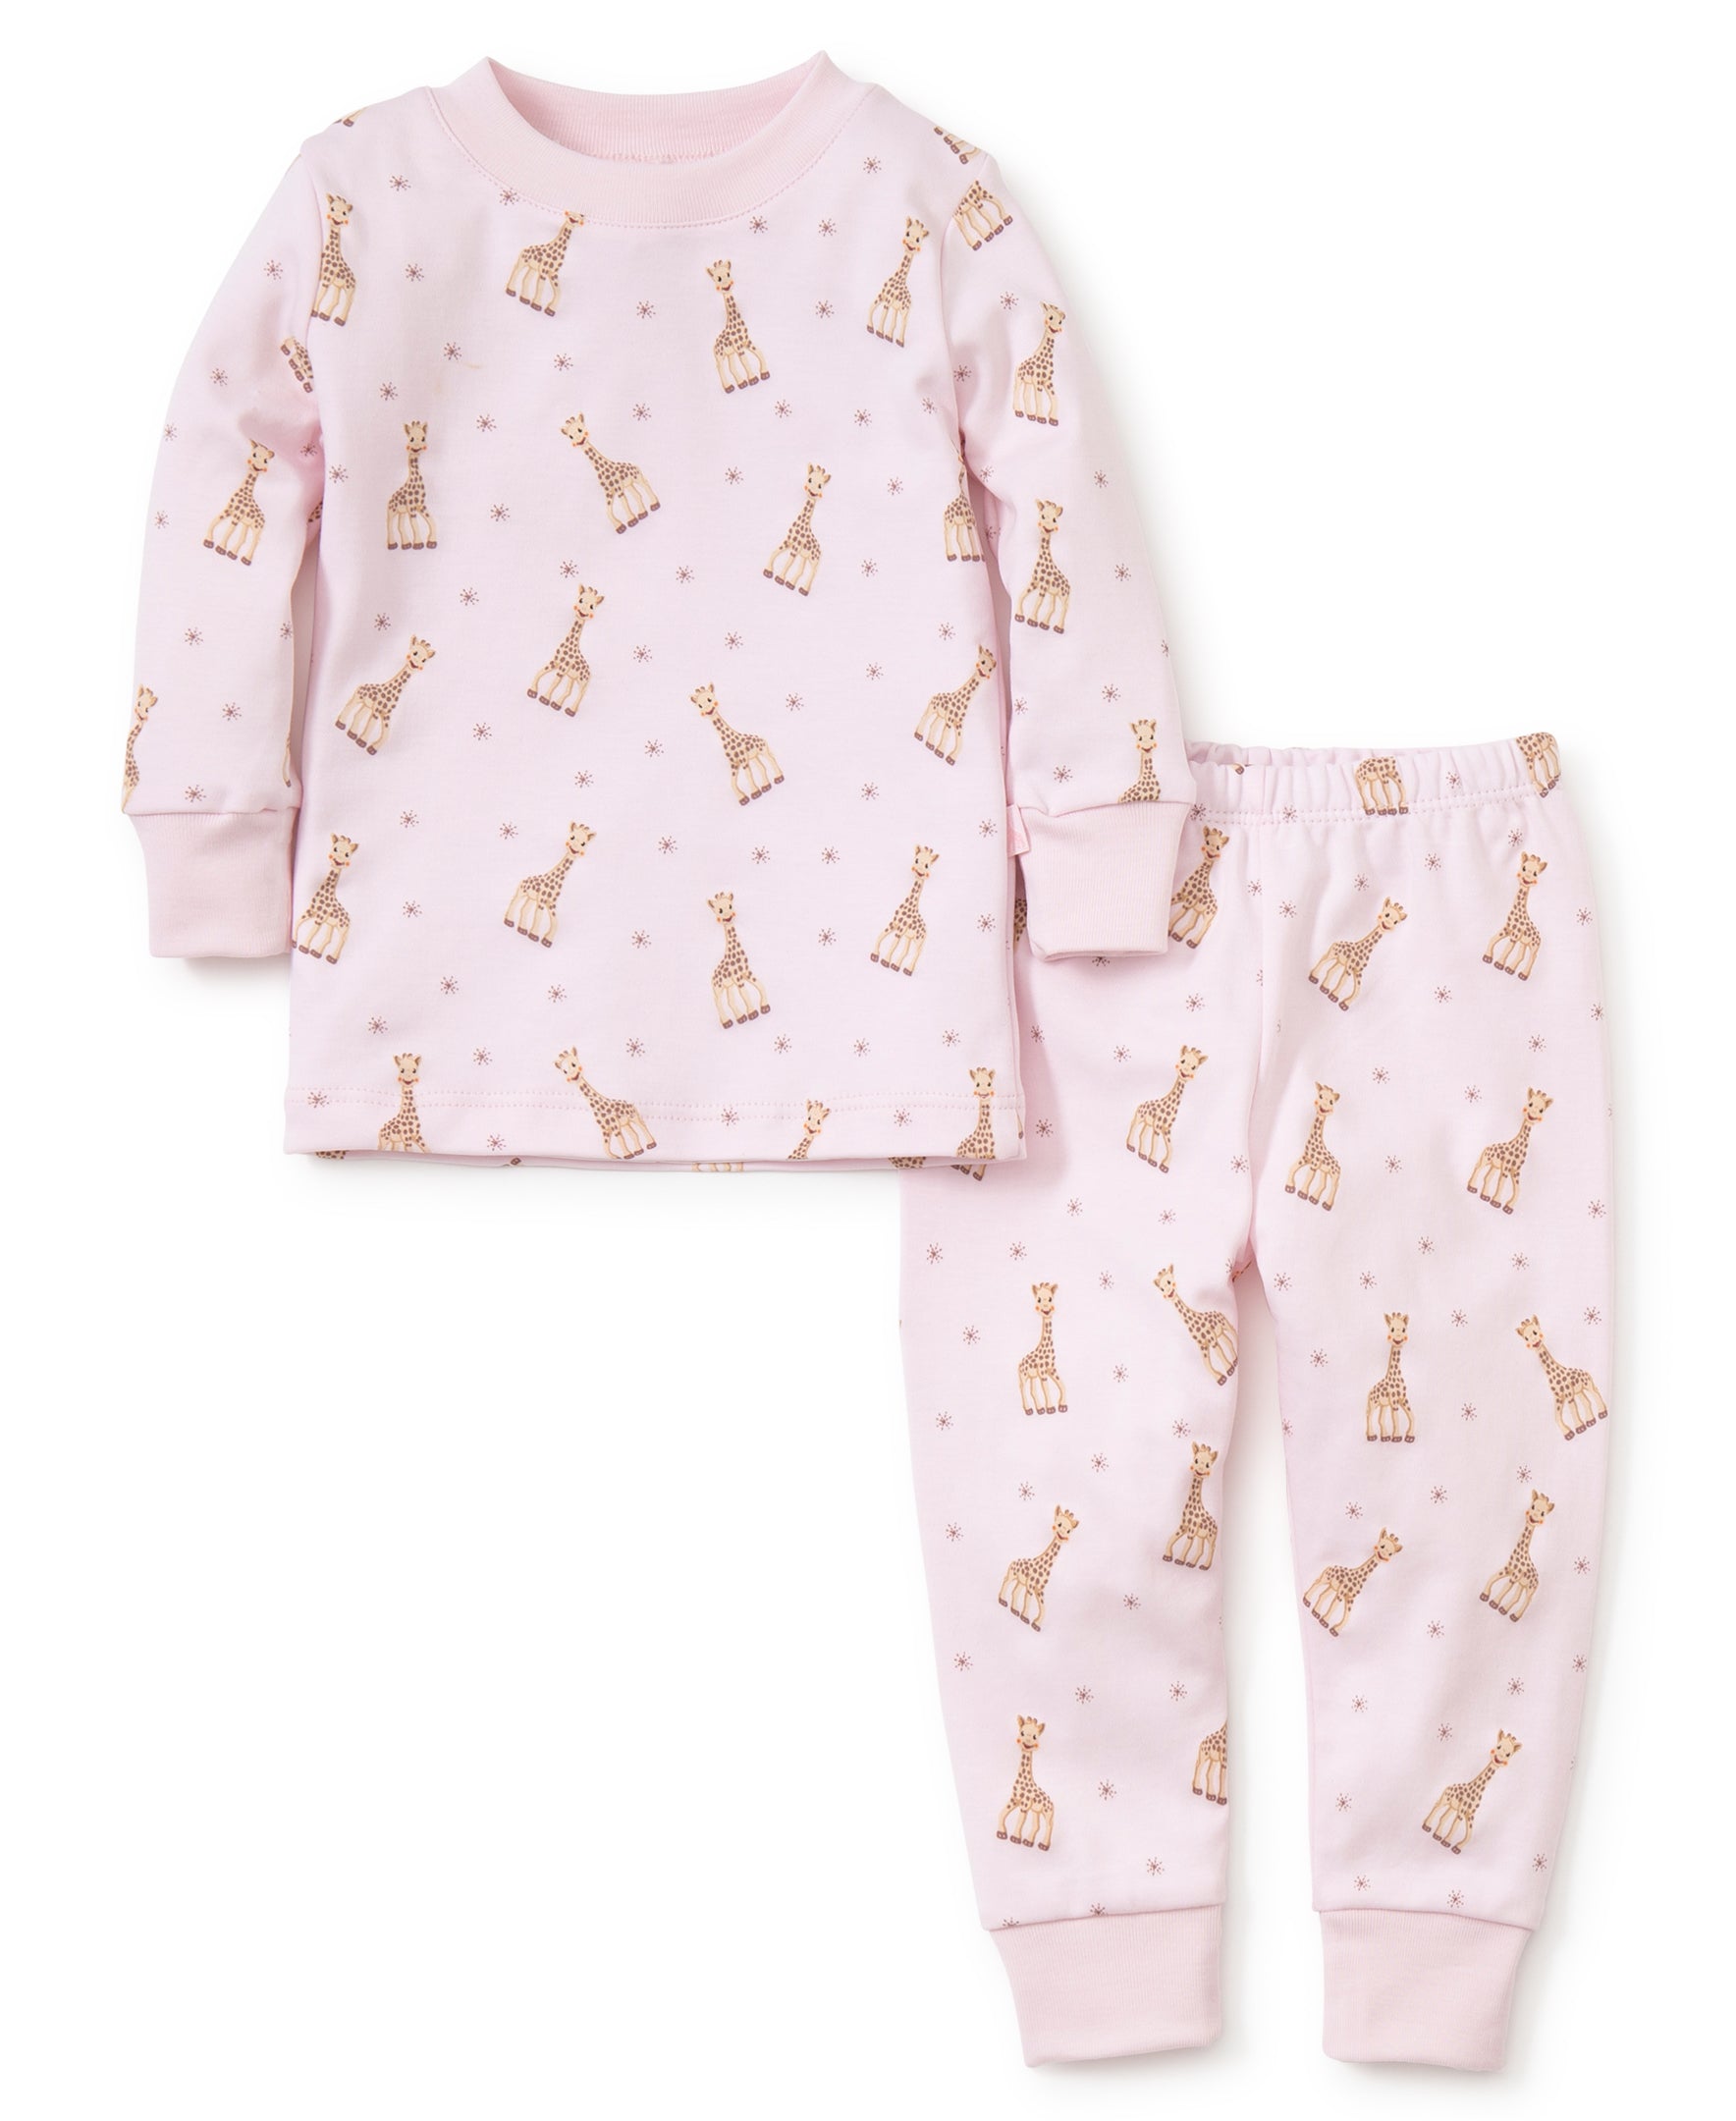 Sophie la girafe Pink Print Toddler Pajamas - Kissy Kissy